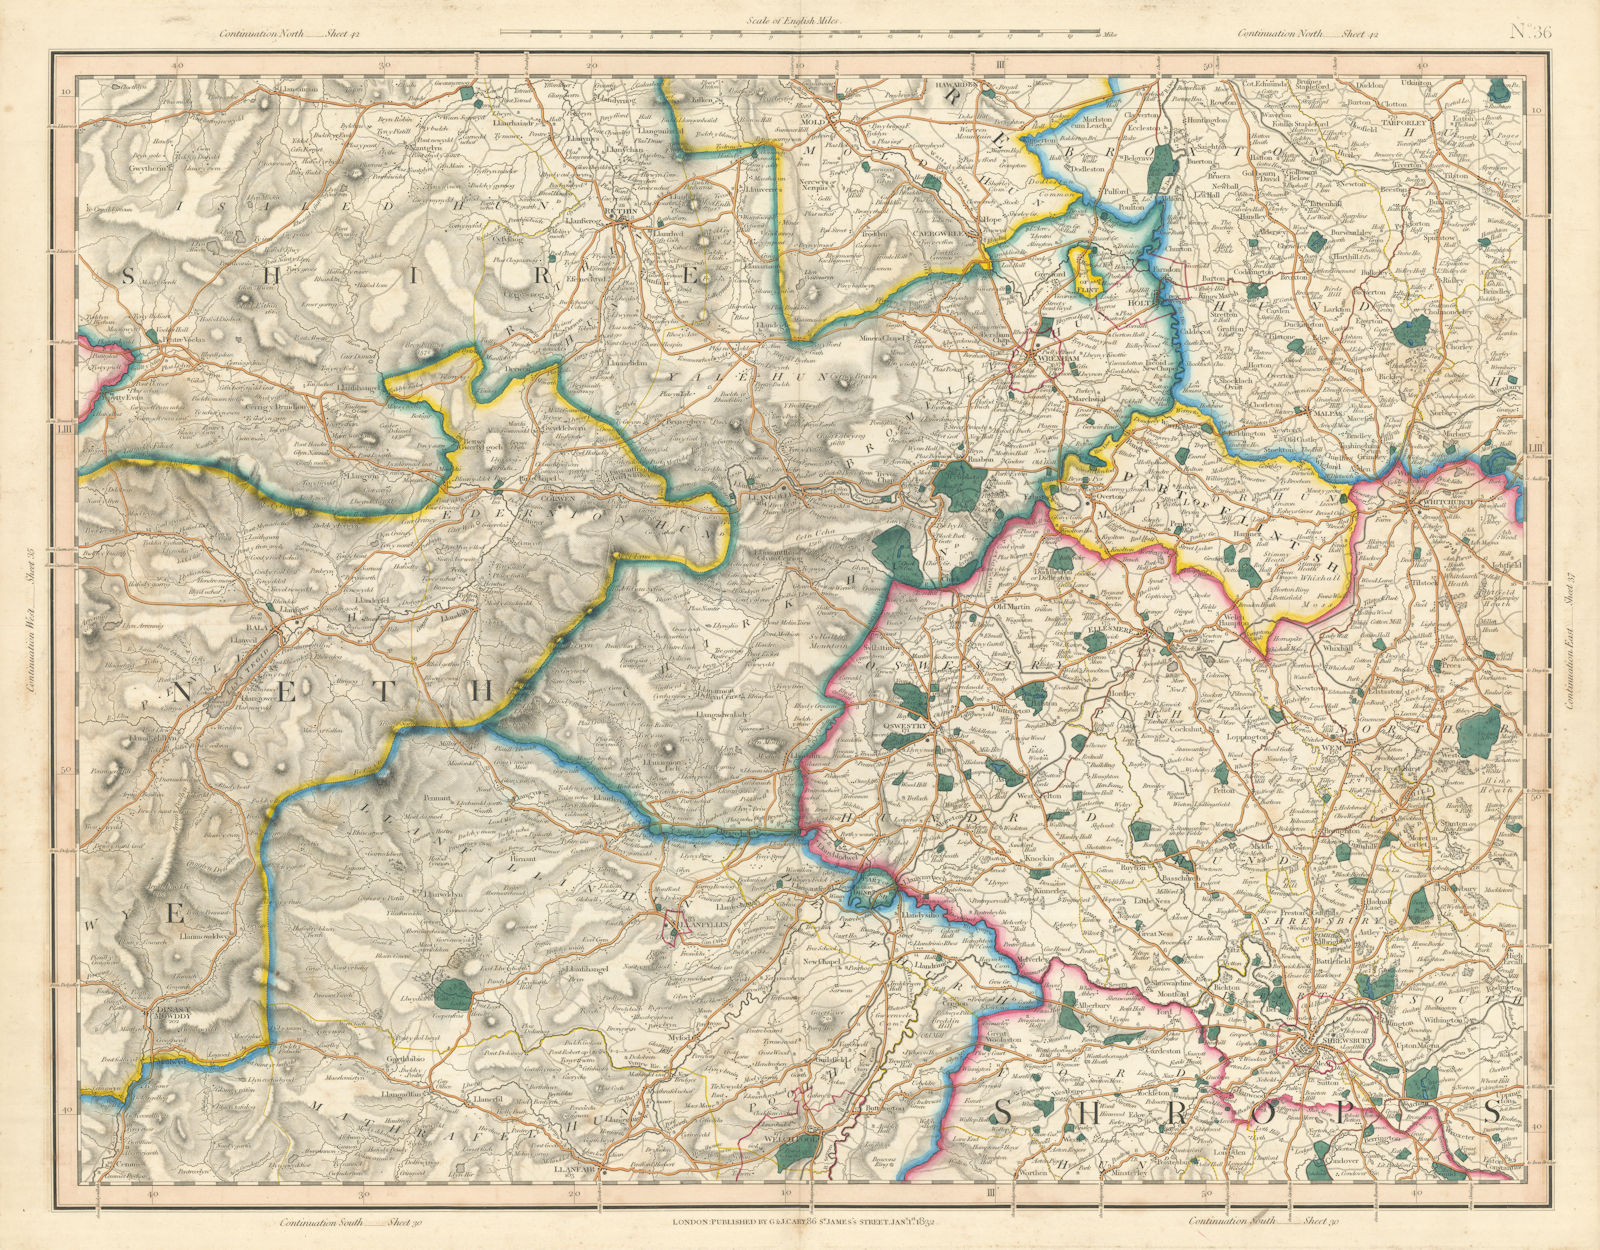 South Denbighshire, N Montgomeryshire, E Merionethshire, NW Shrops CARY 1832 map